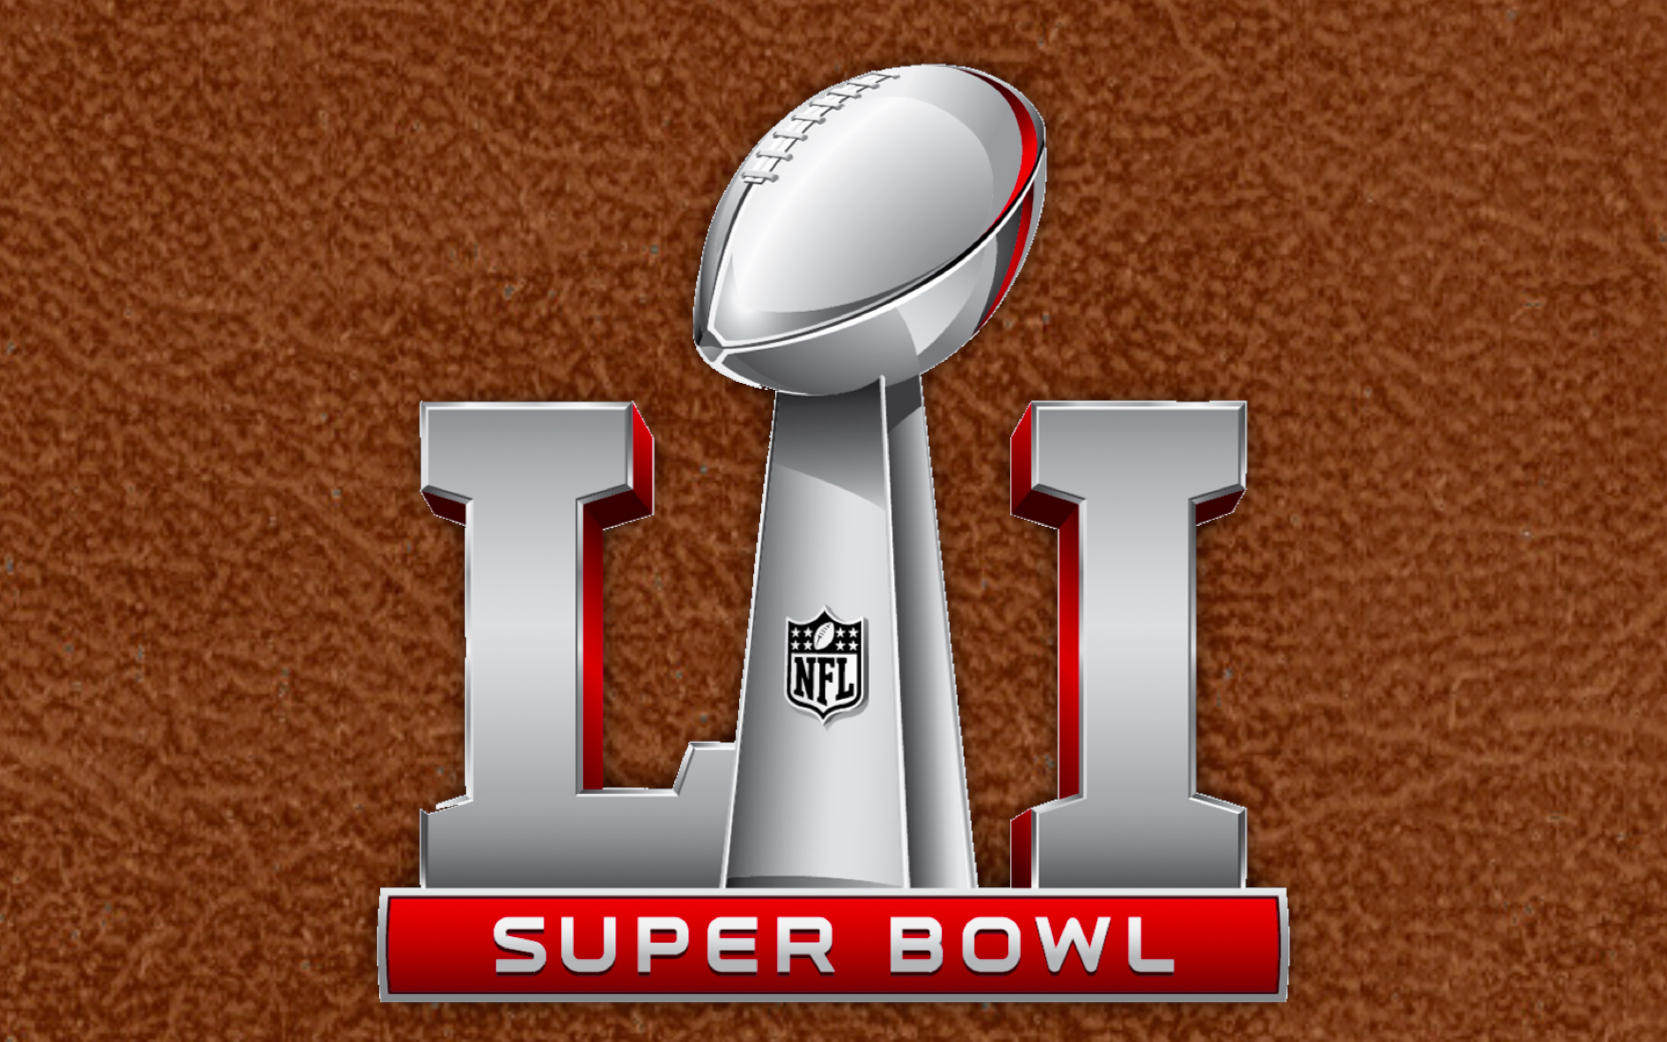 Will Super Bowl LI Be Worth Watching?